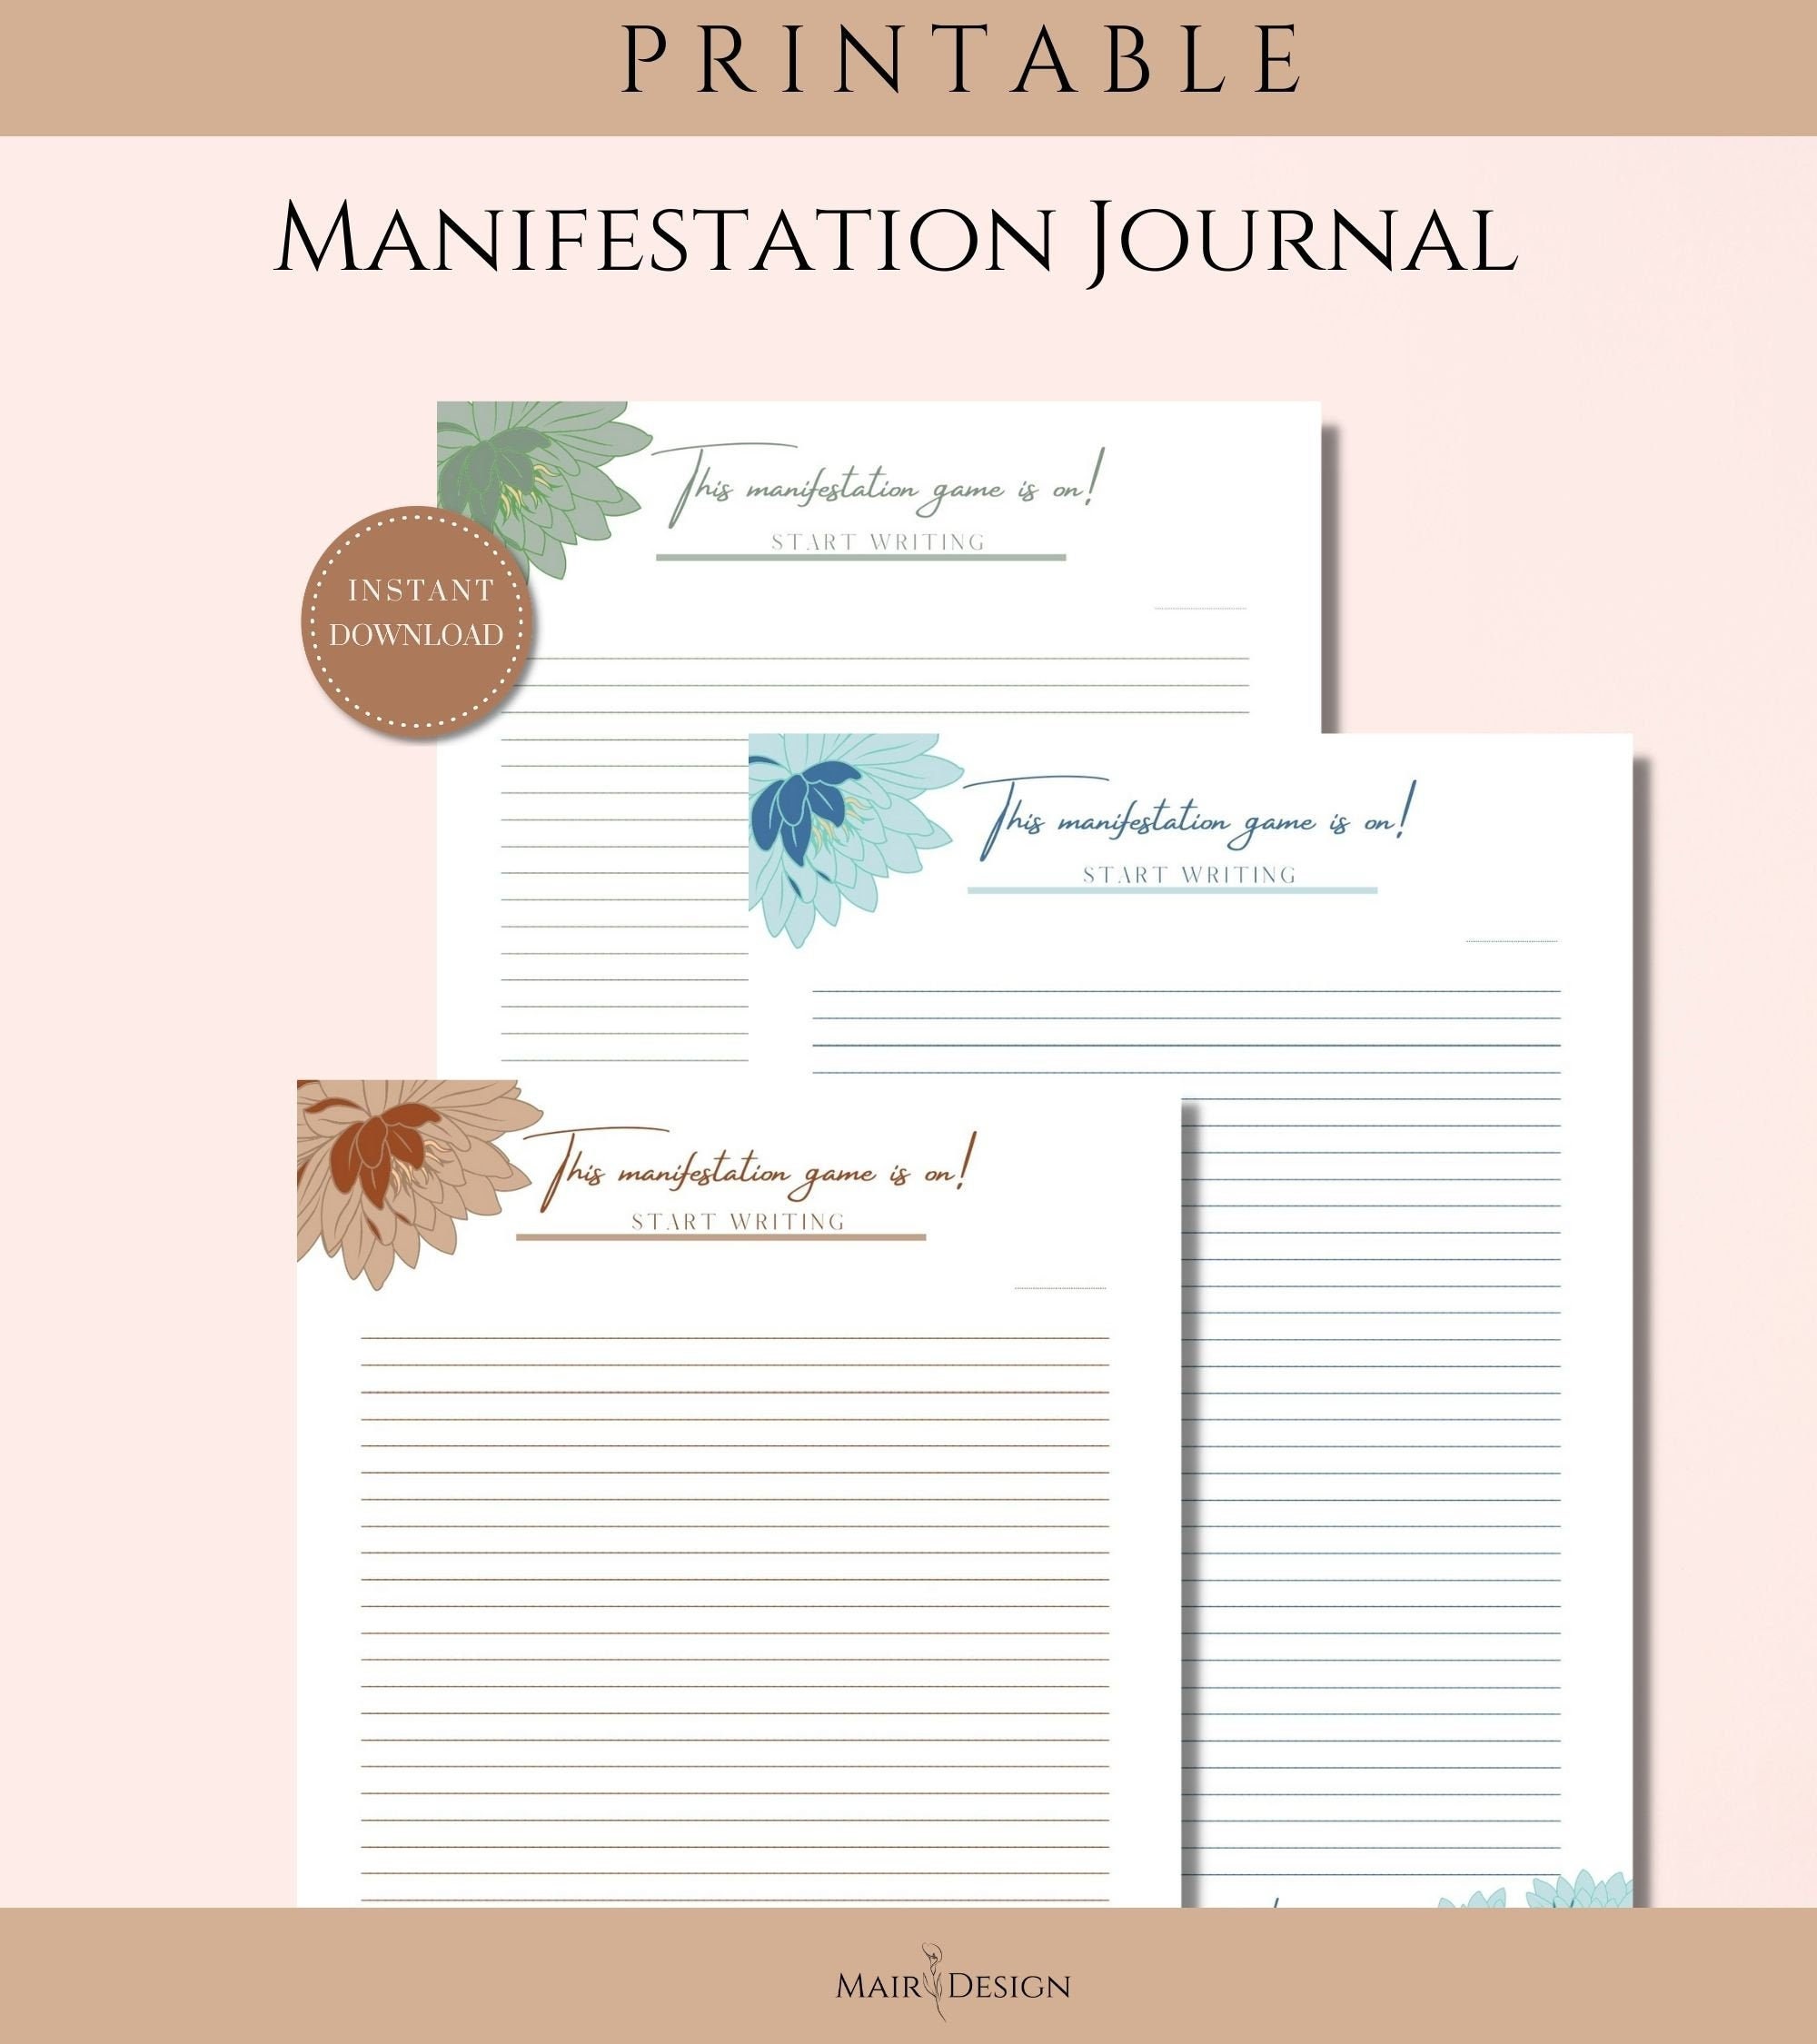 369 manifest Method journal printable for manifesting your Etsy